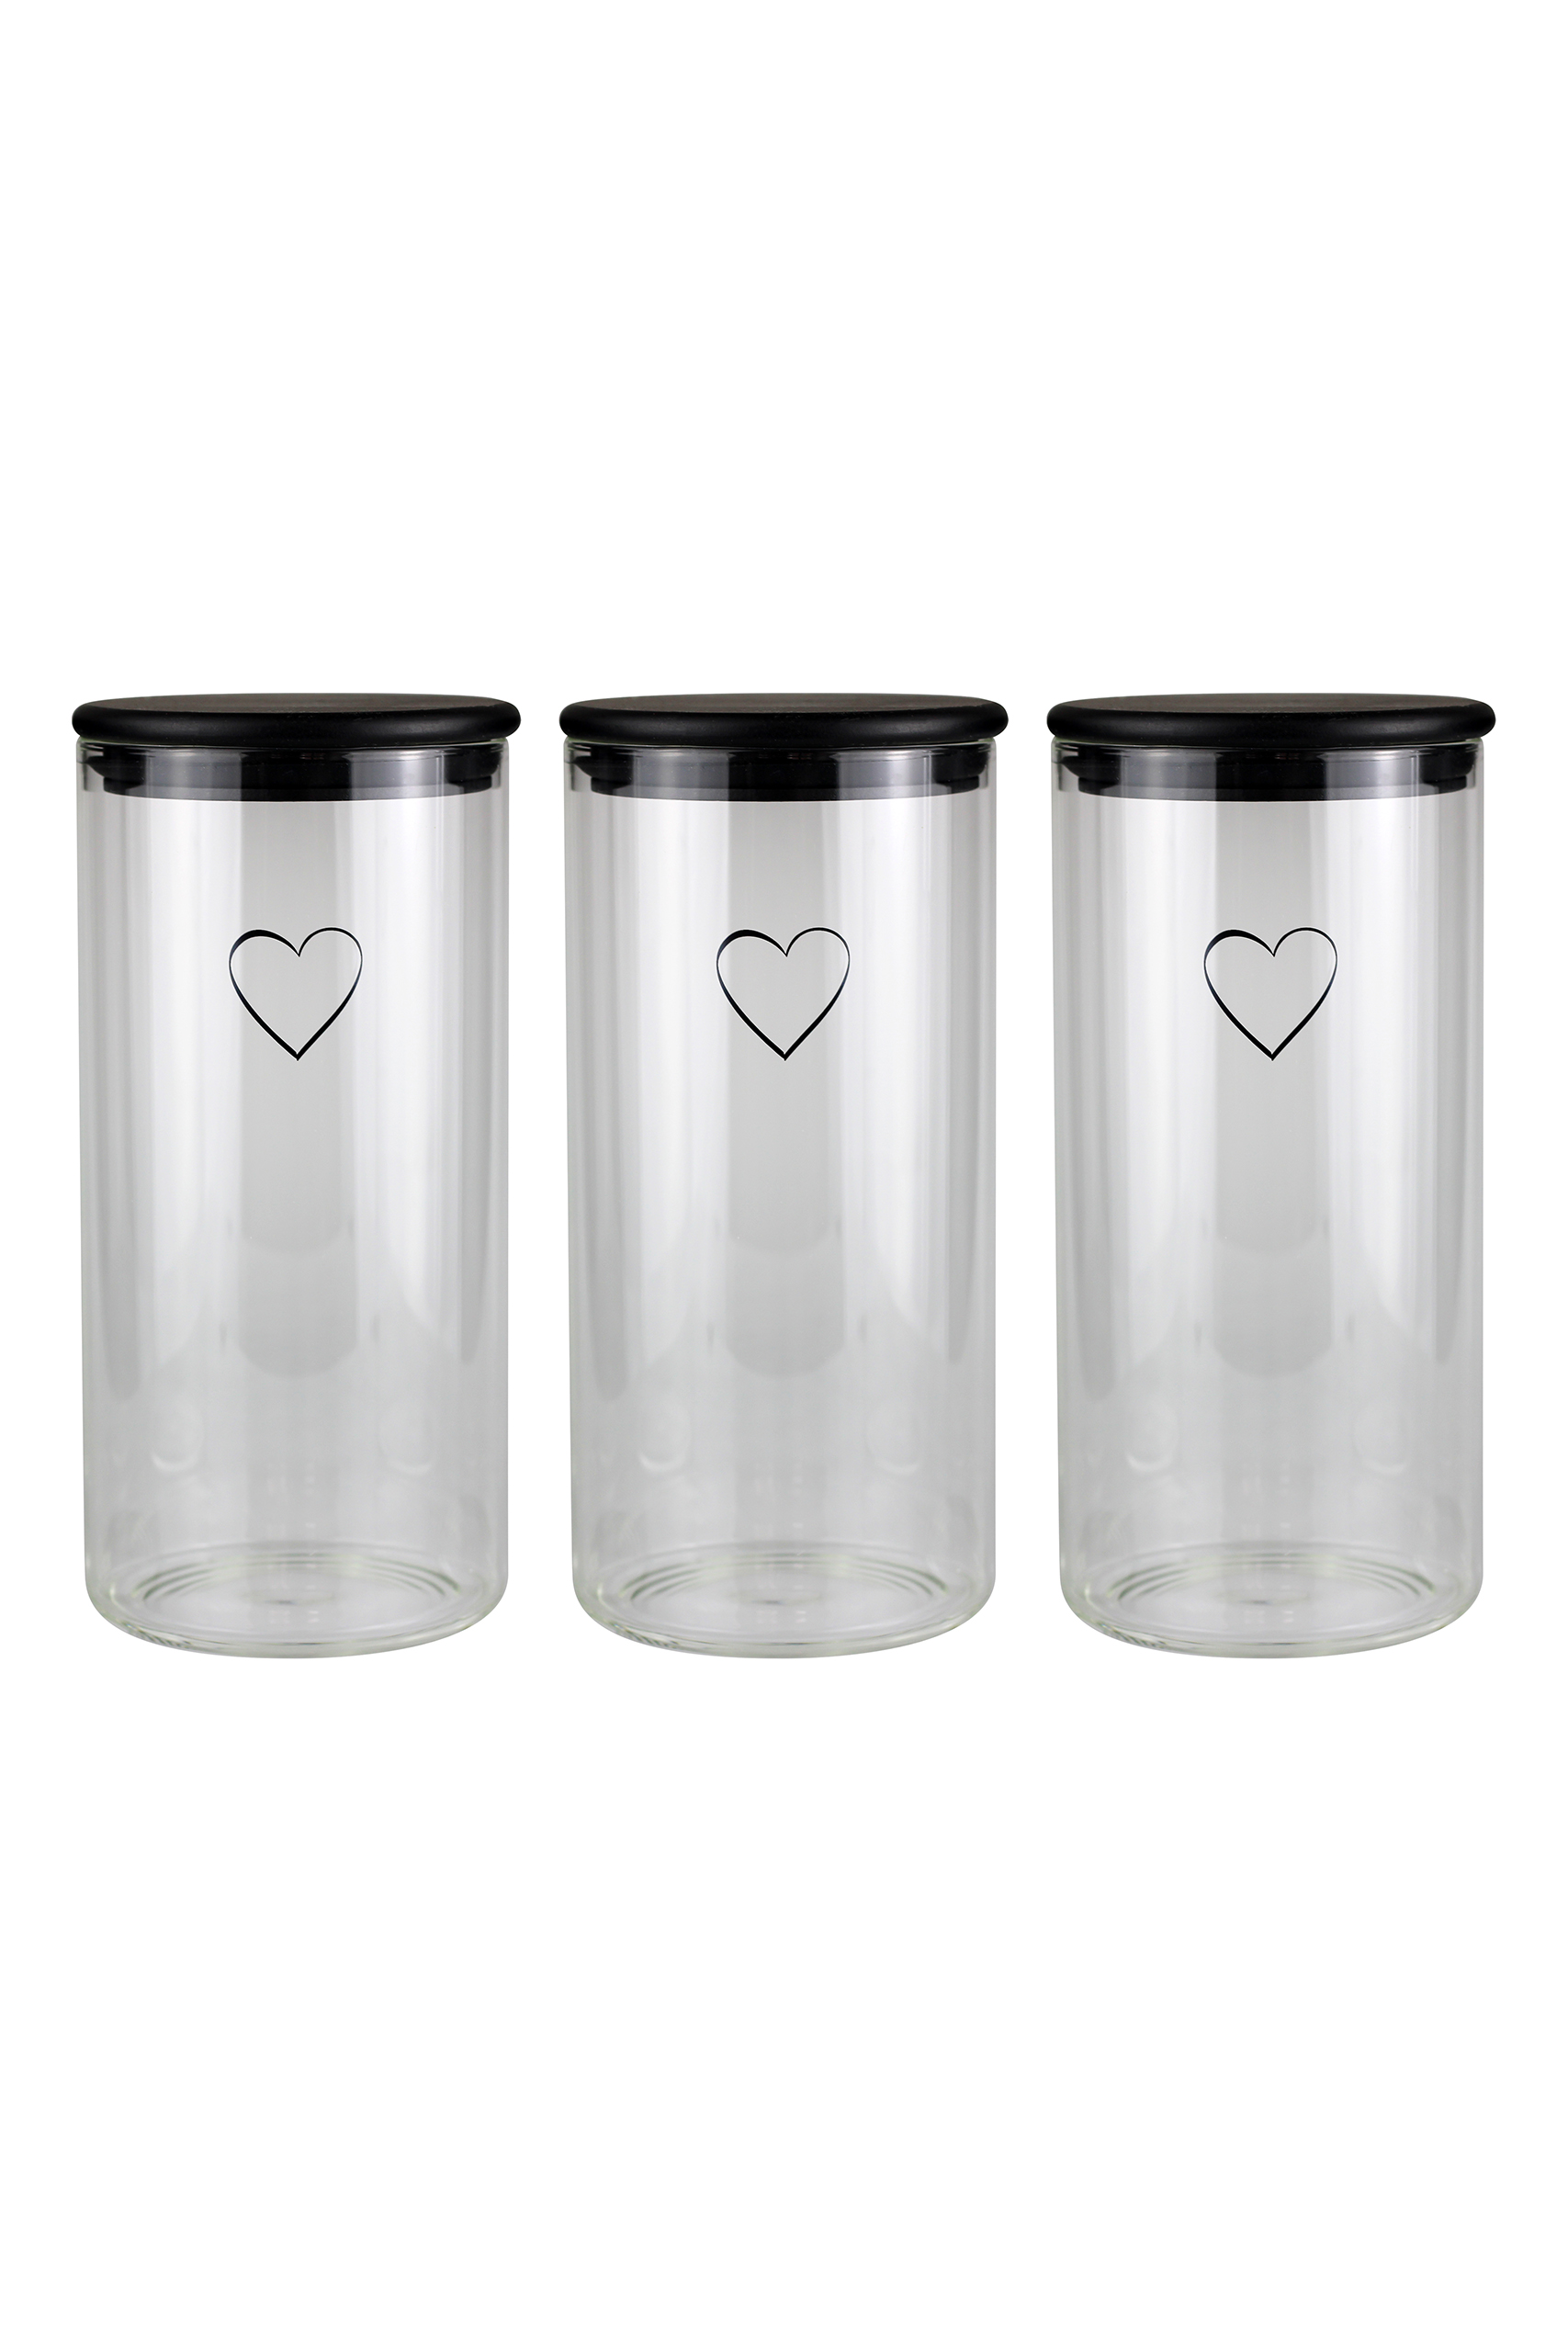 Set 3 Glass Black Heart Bamboo Storage Jars - Black lid 1400ml | Pretty Little Home